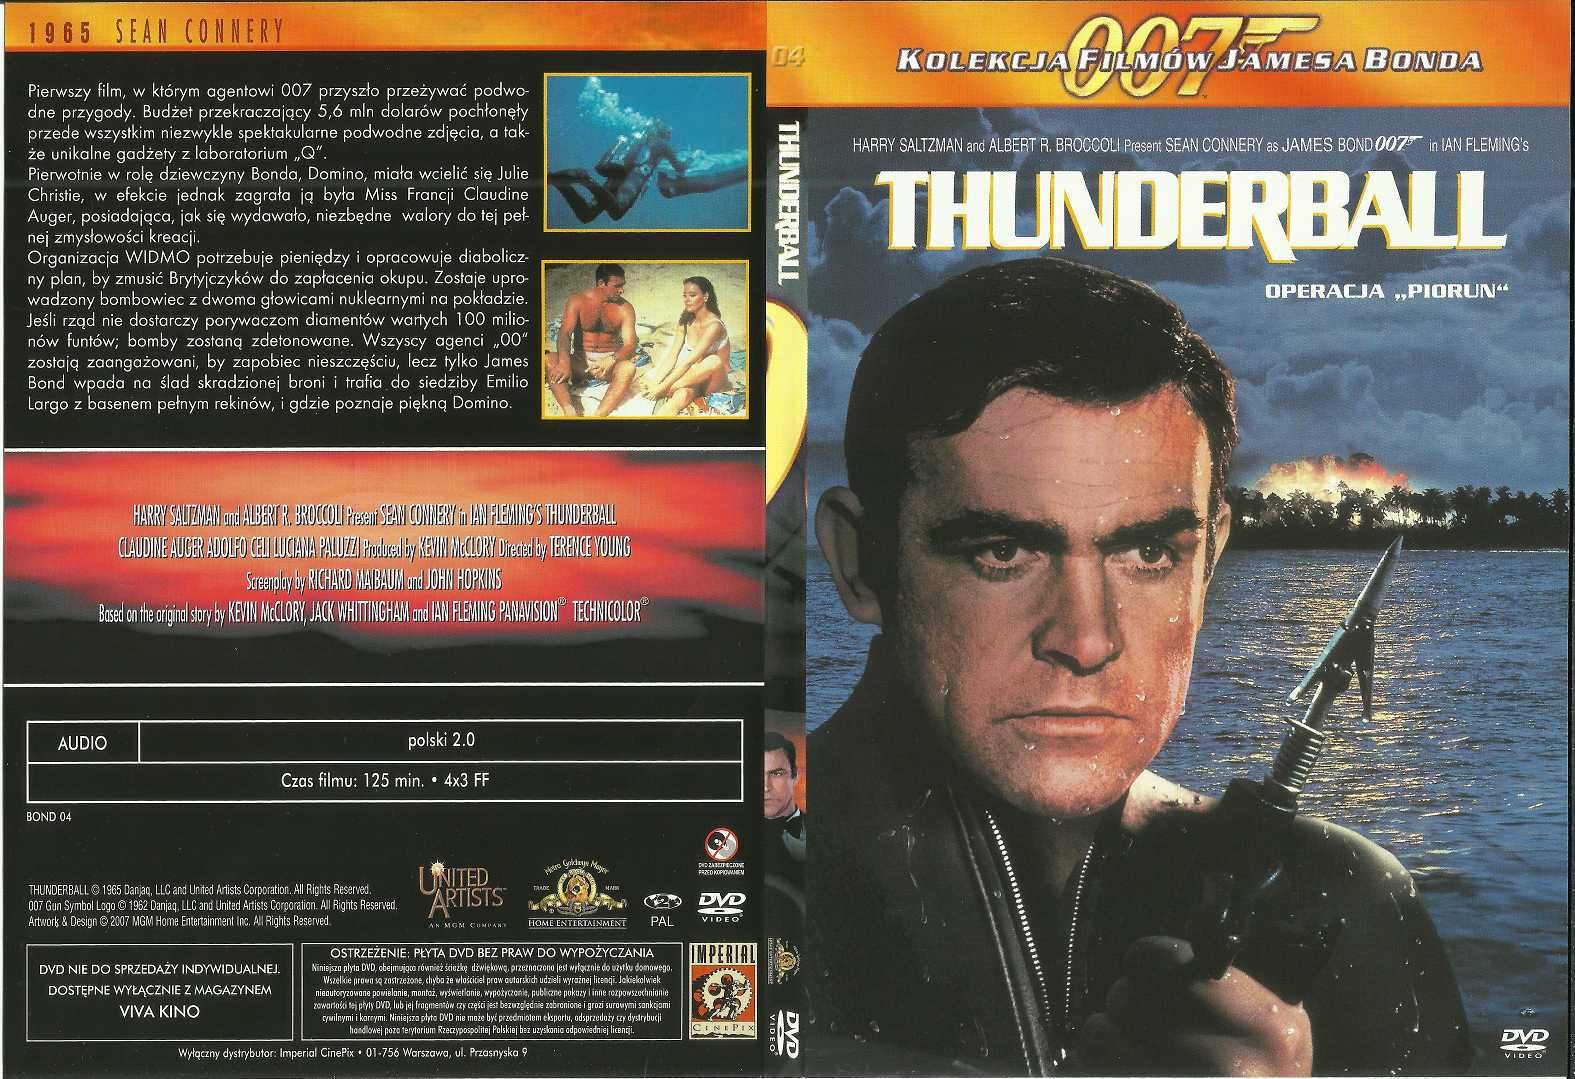 Thunderball Operacja "Piorun" (1965) - film na DVD